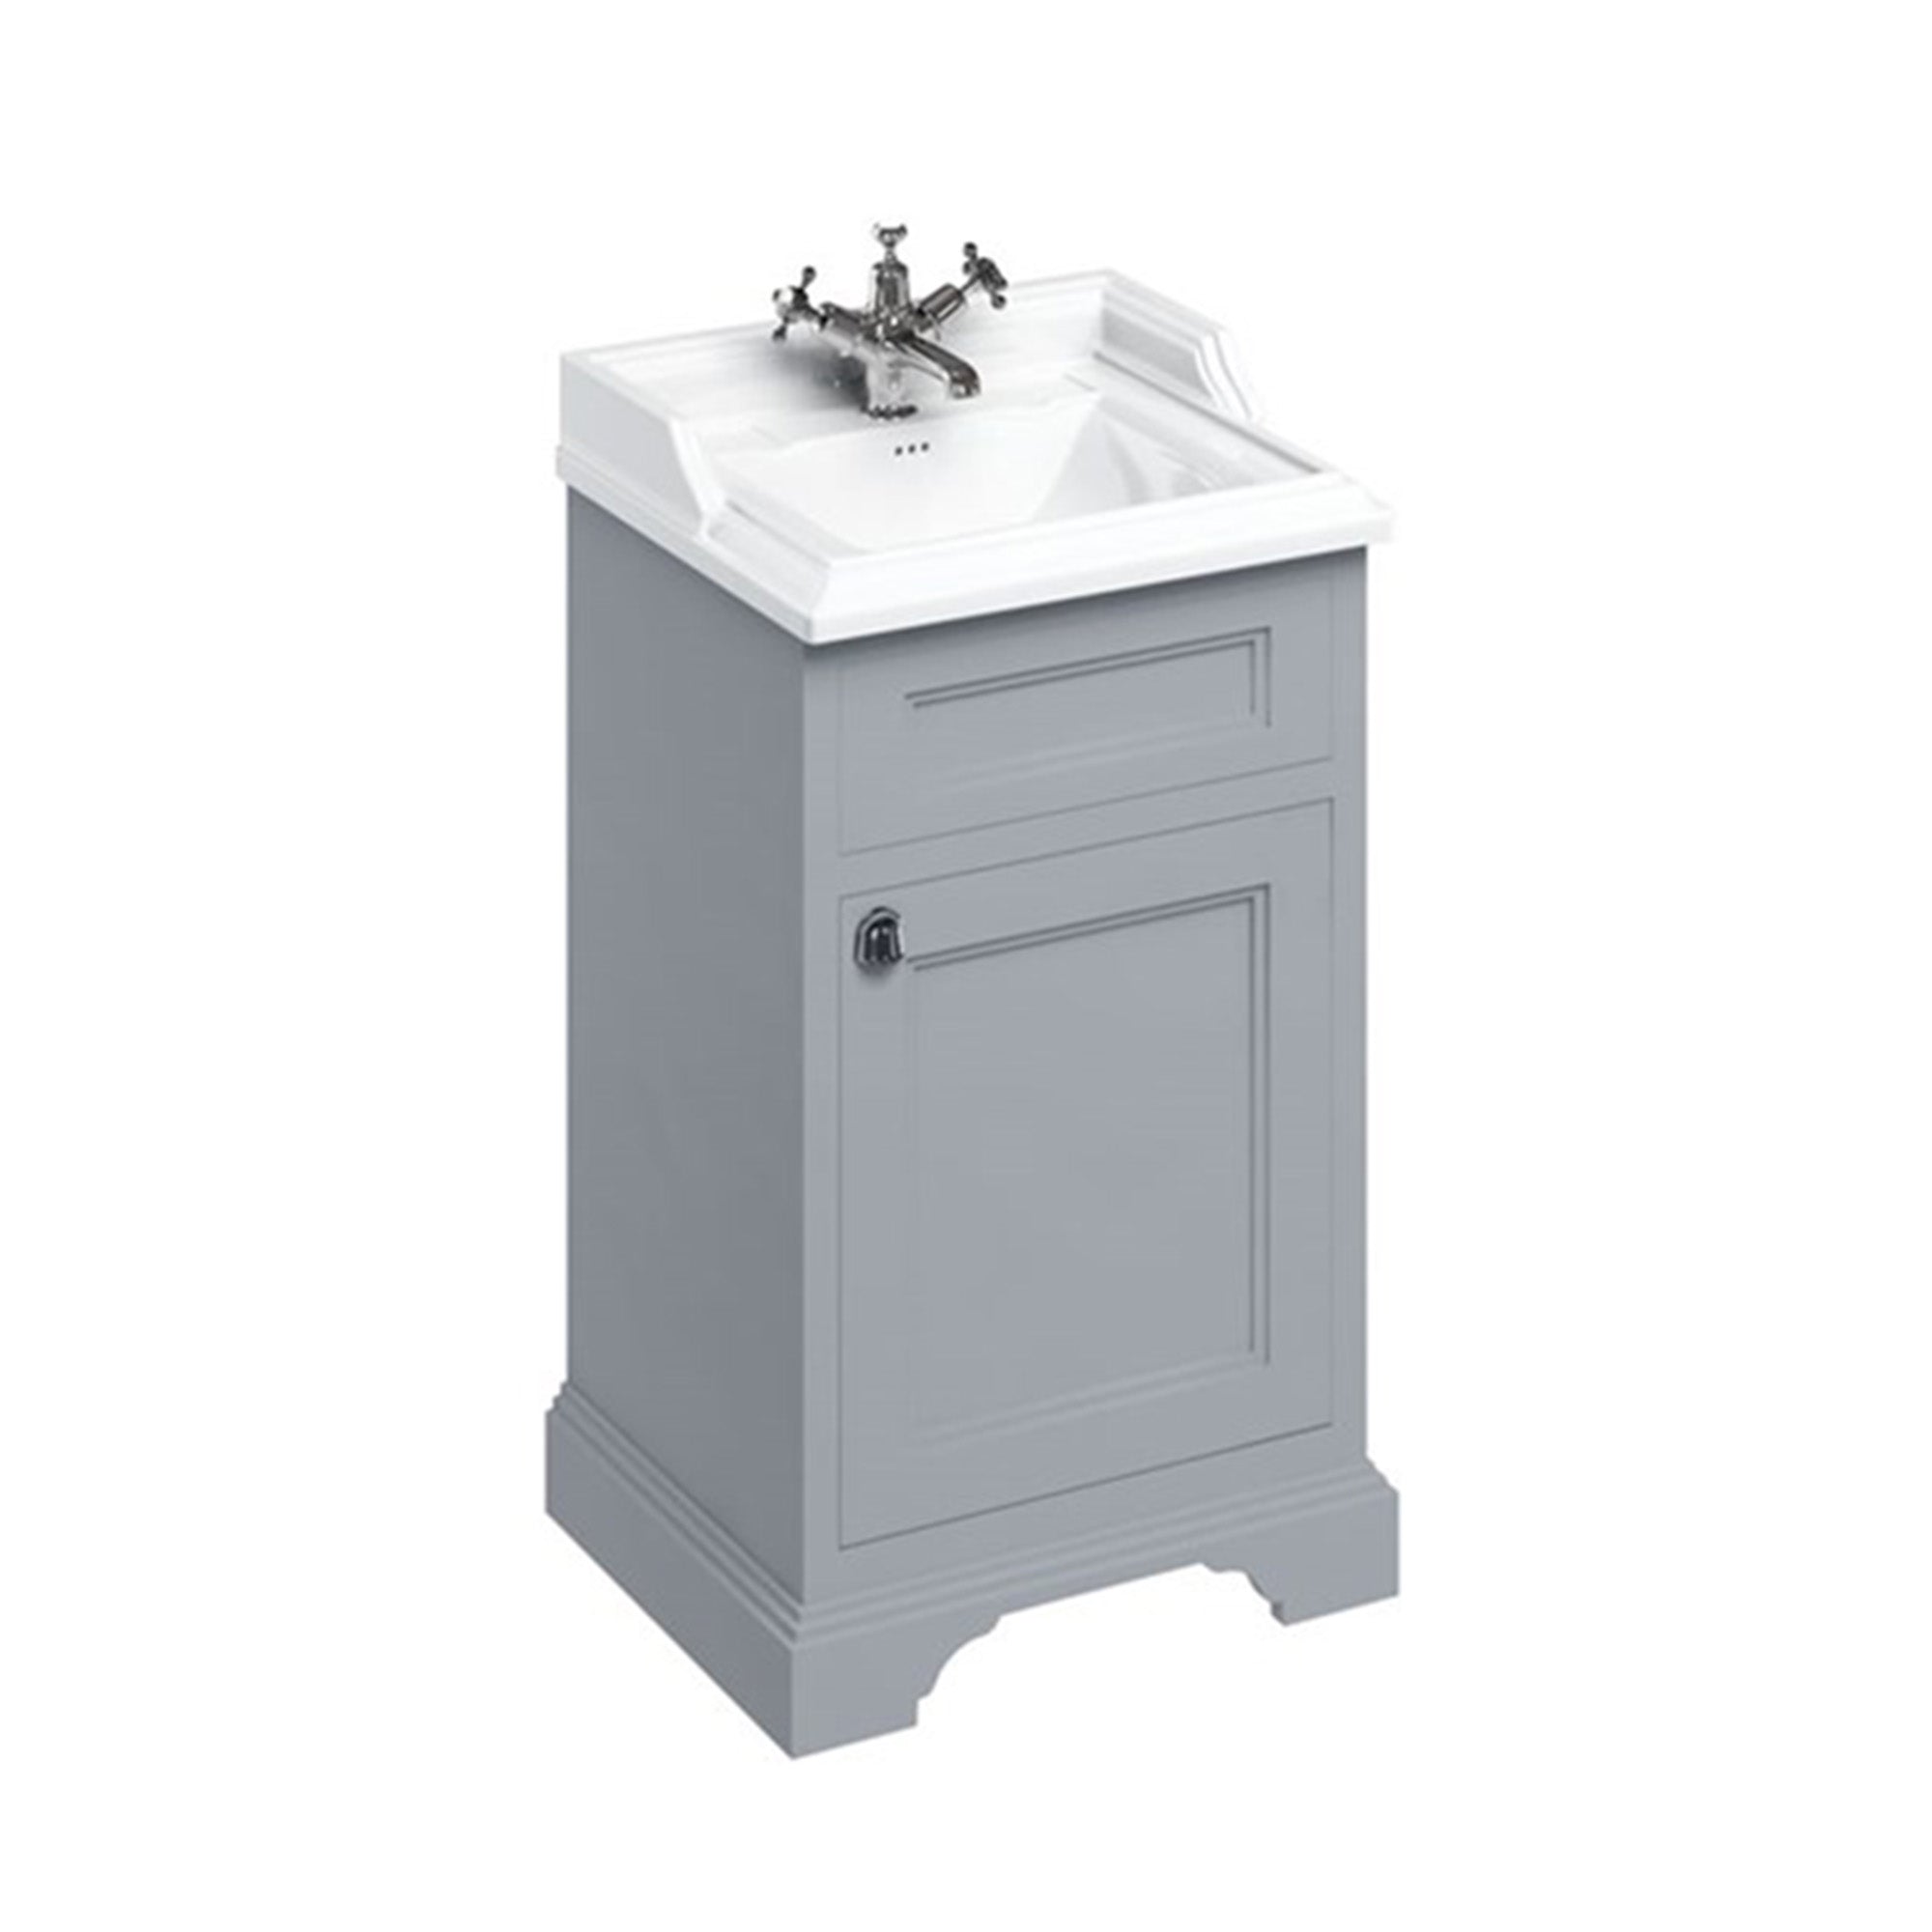 burlington 50 freestanding cloakroom vanity unit with basin classic grey